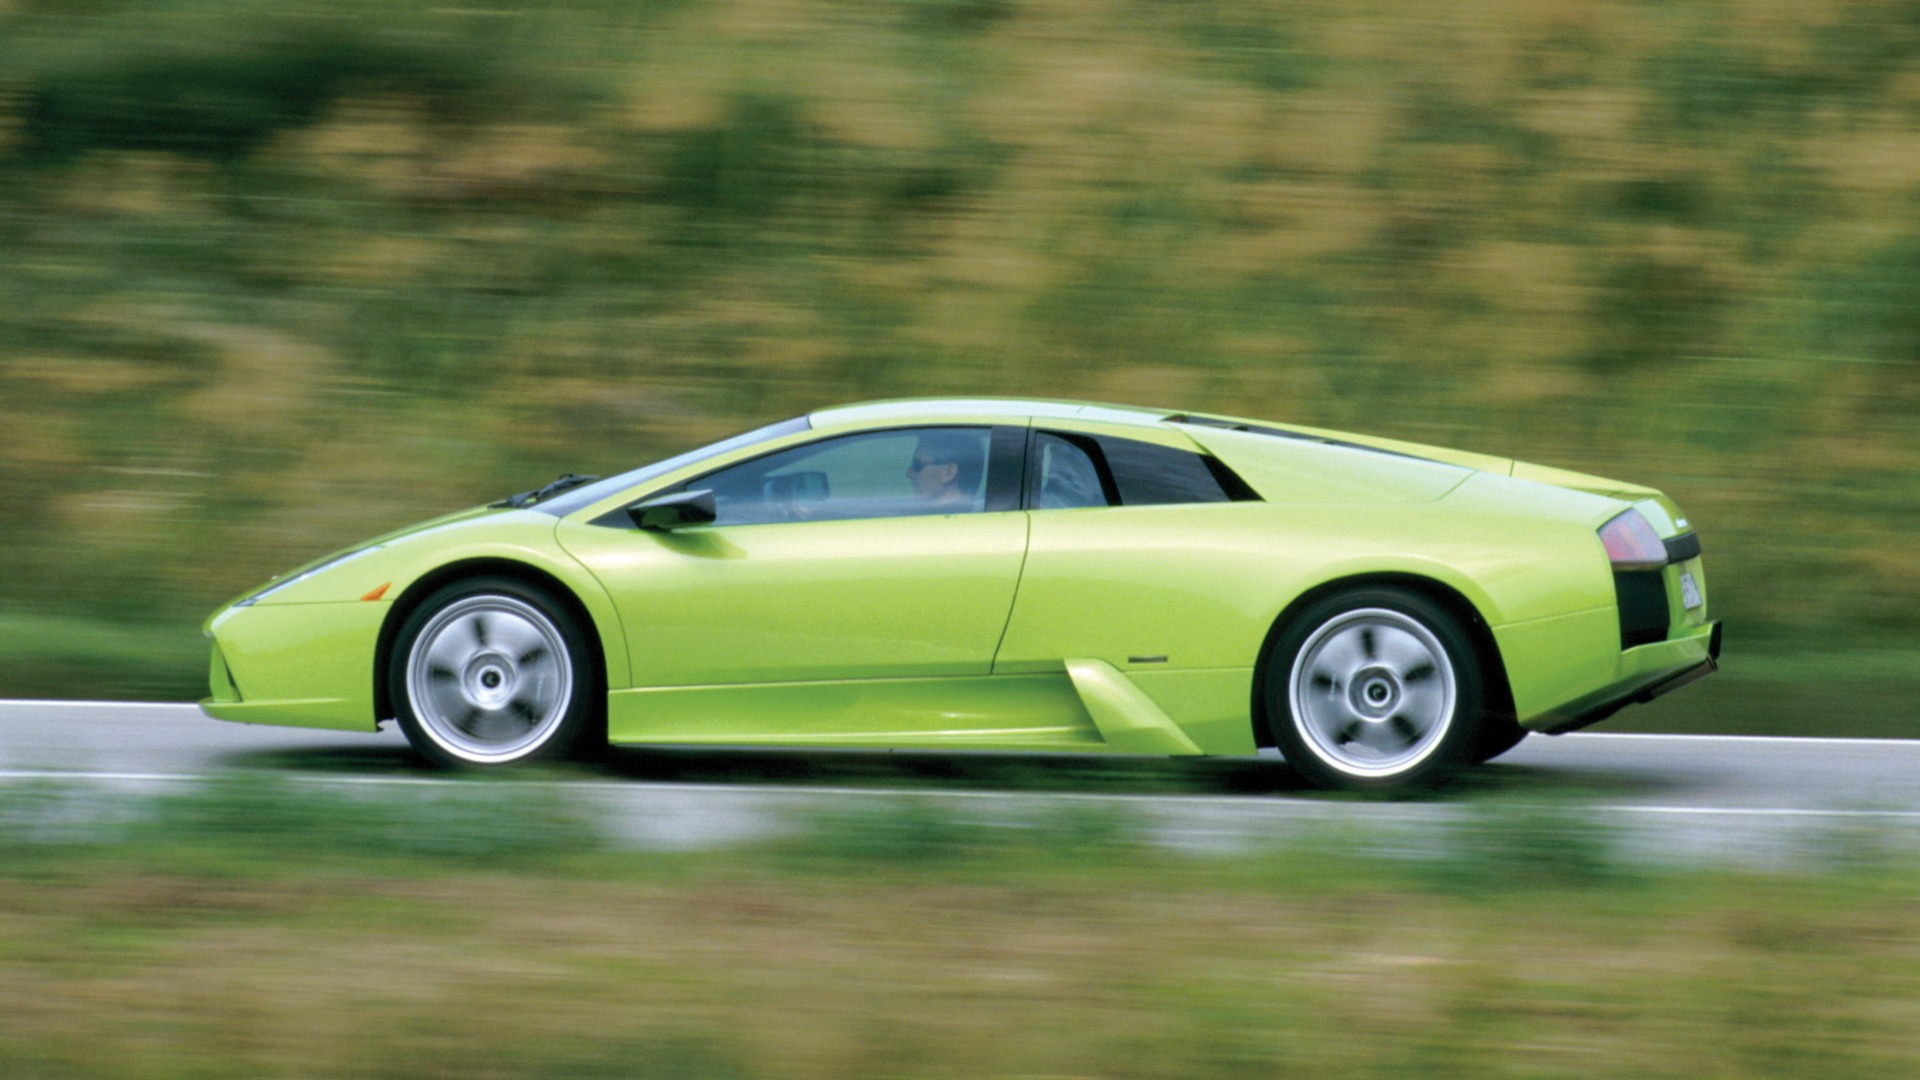 Lamborghini Murcielago - 2001 兰博基尼(二)43 - 1920x1080